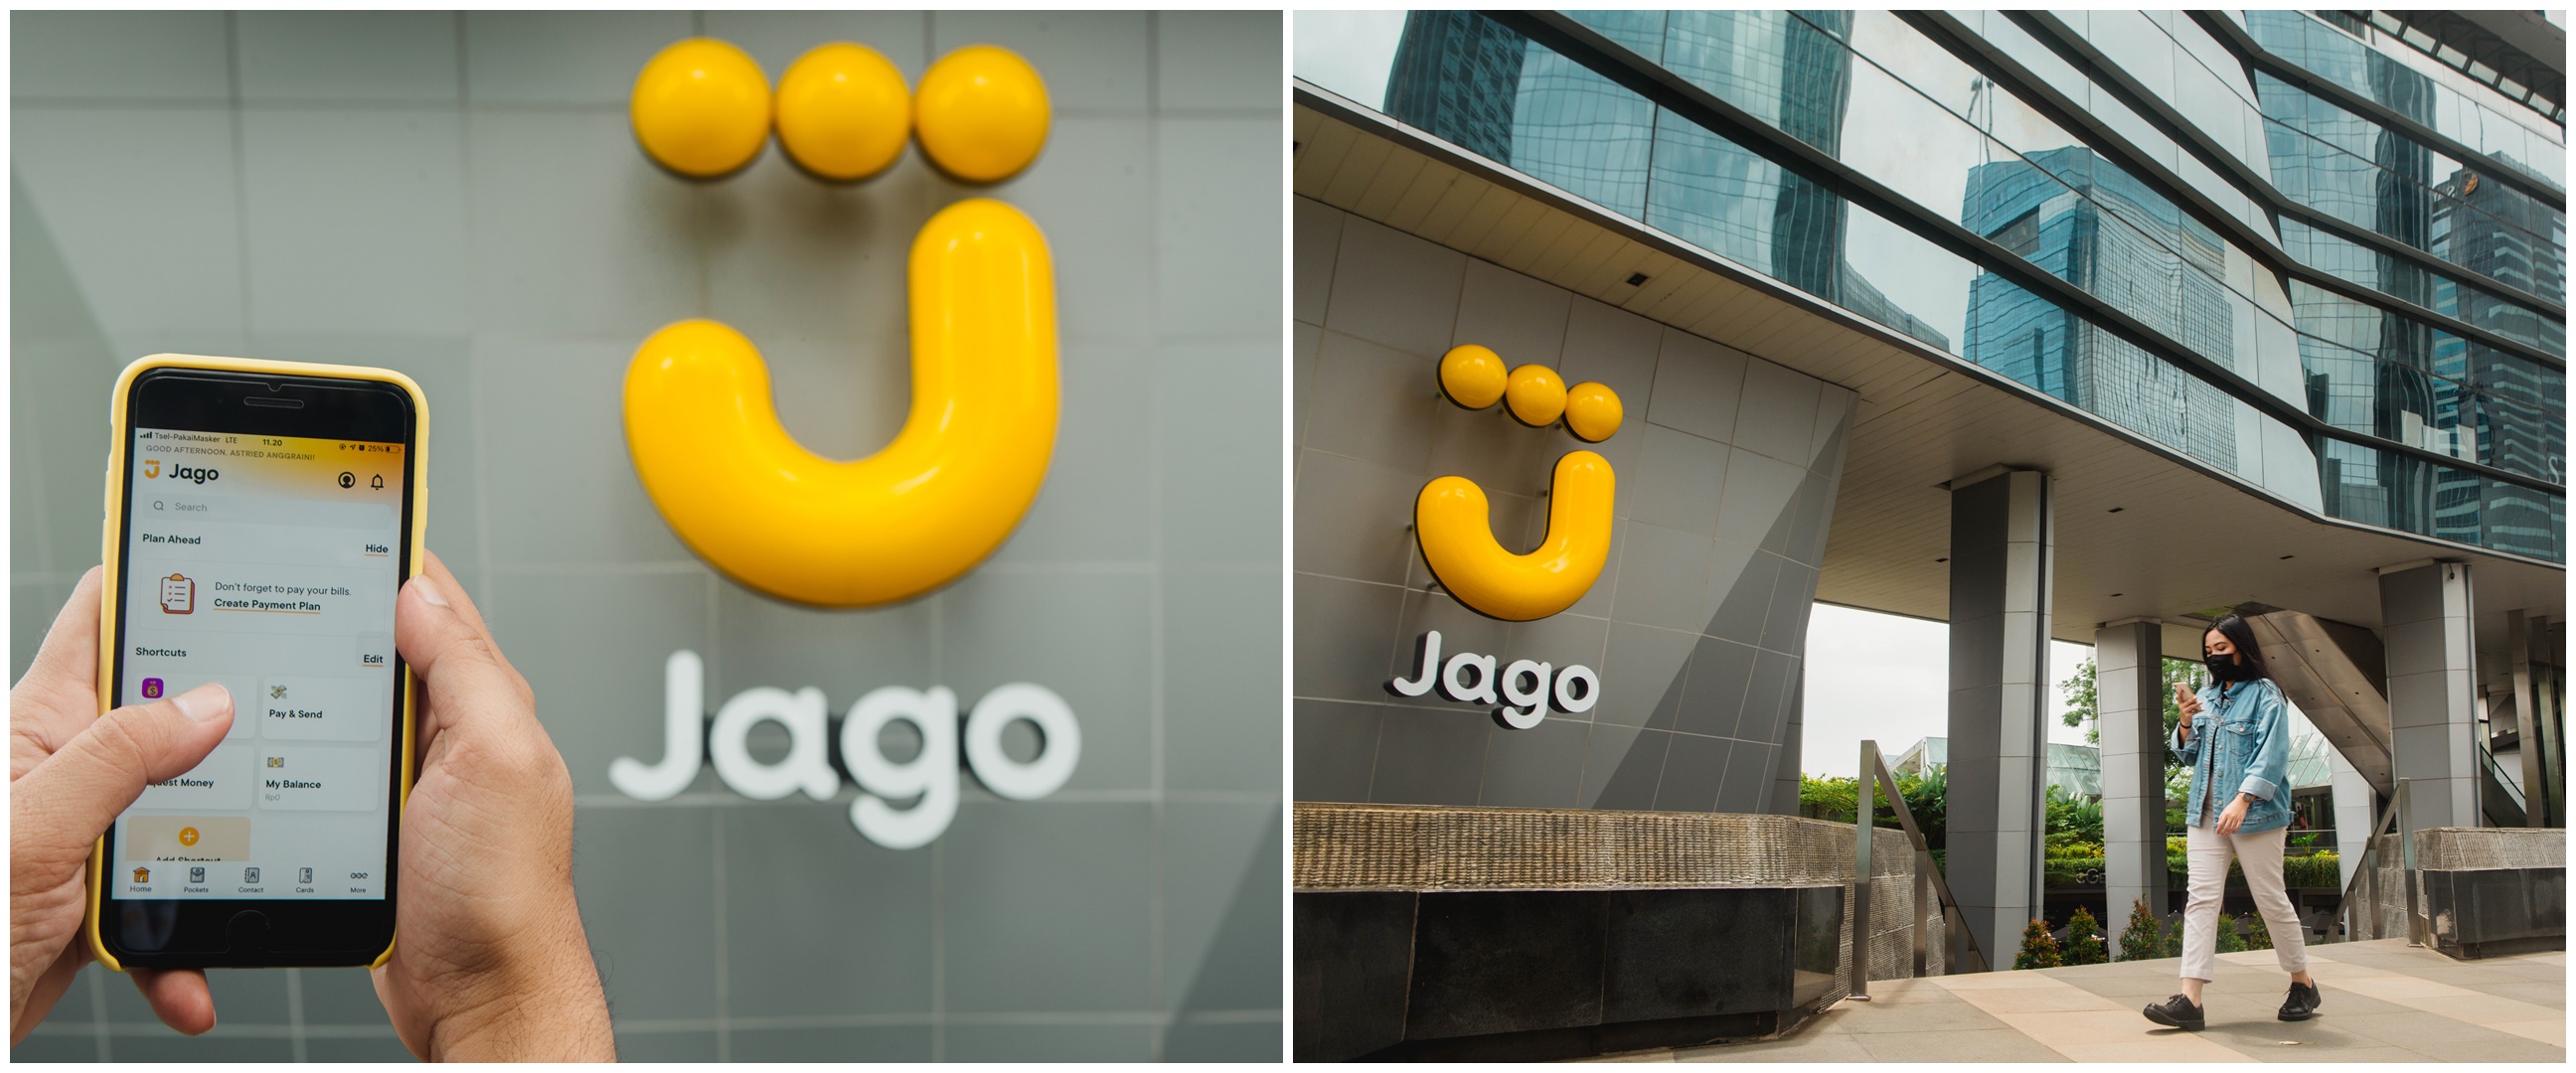 Mengenal fitur unik Bank Jago, solusi finansial mudah lewat aplikasi